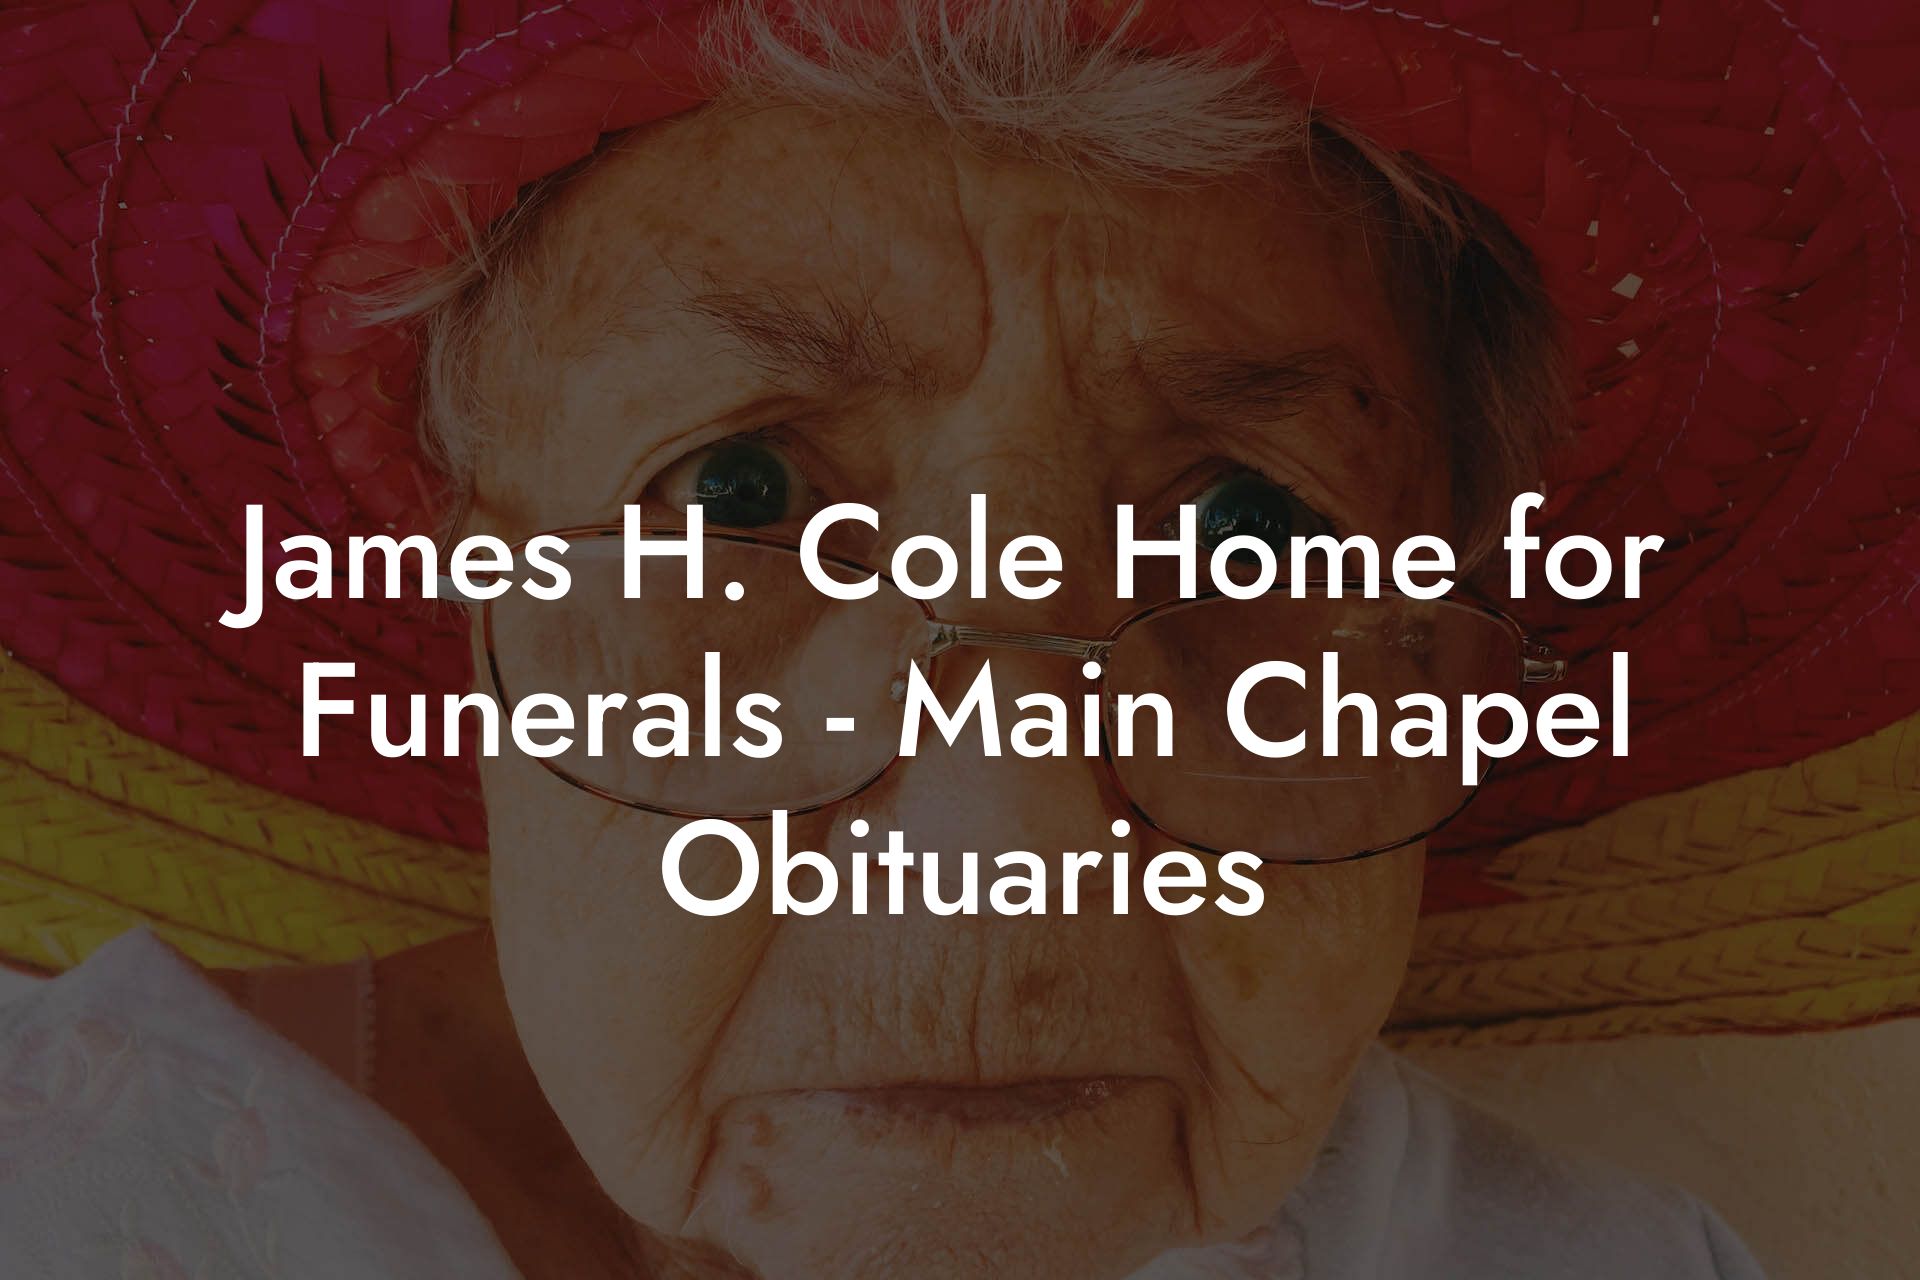 James H. Cole Home for Funerals - Main Chapel Obituaries